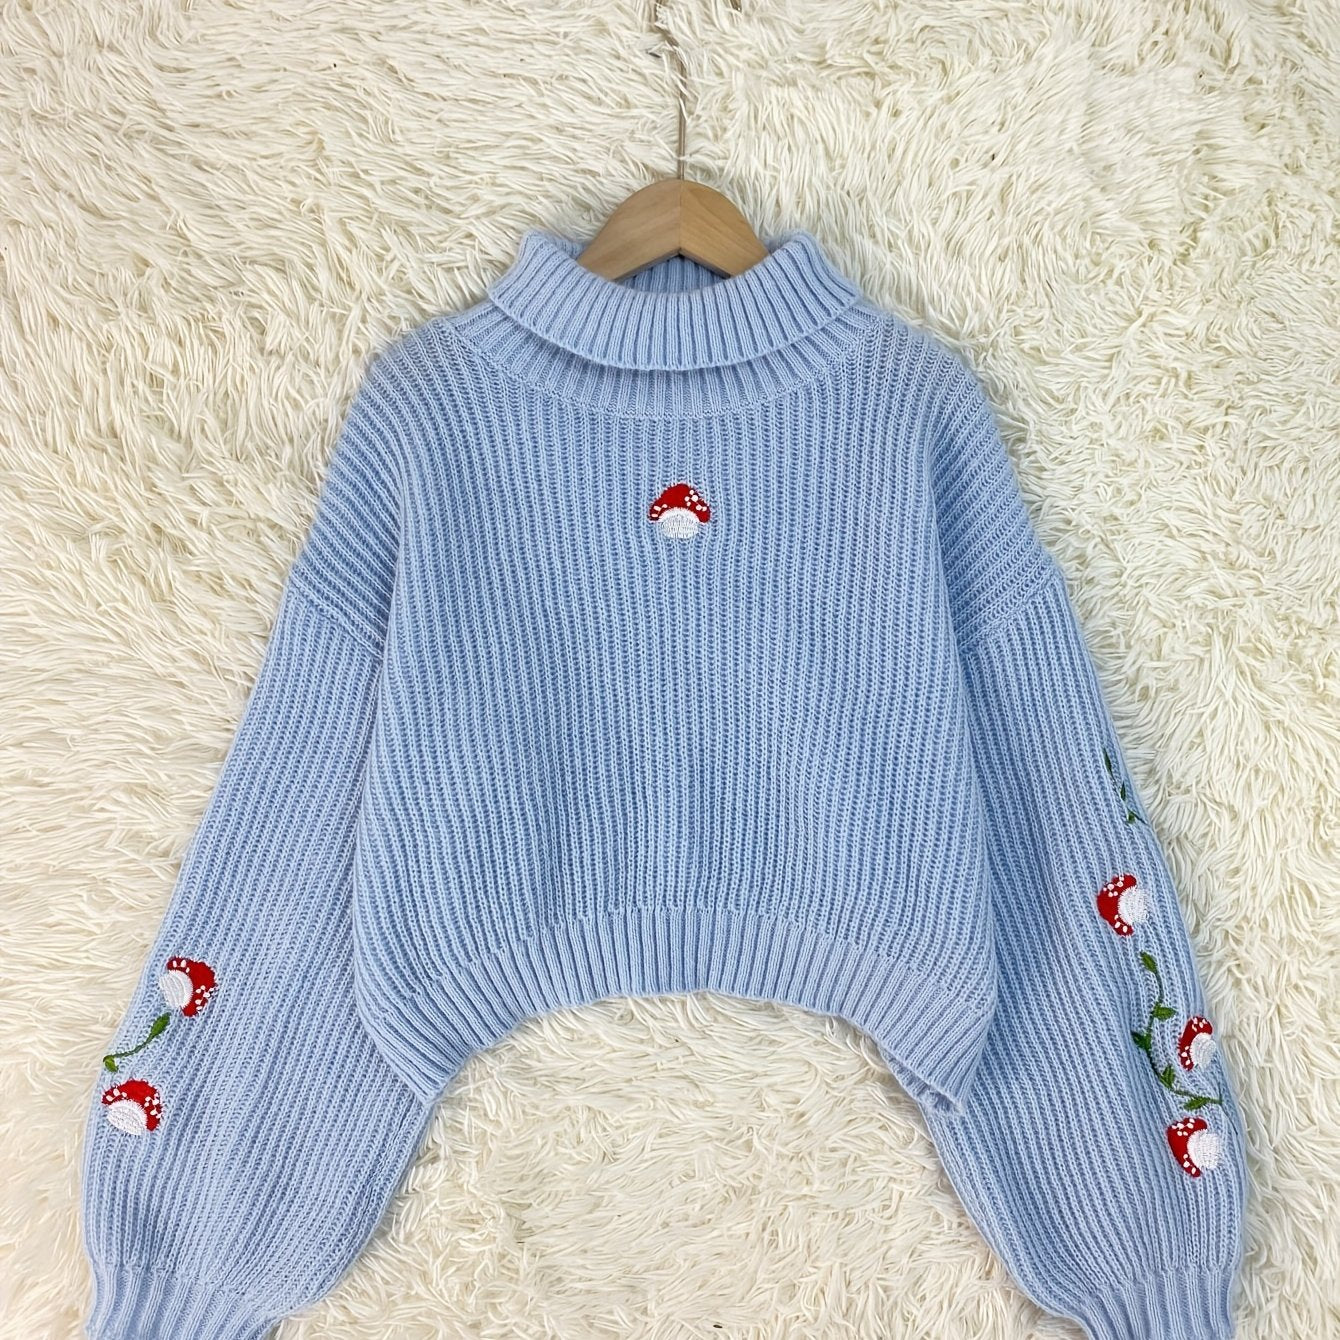 Antmvs Mushroom Print Turtleneck Knit Sweater, Casual Solid Long Sleeve Sweater, Women's Clothing